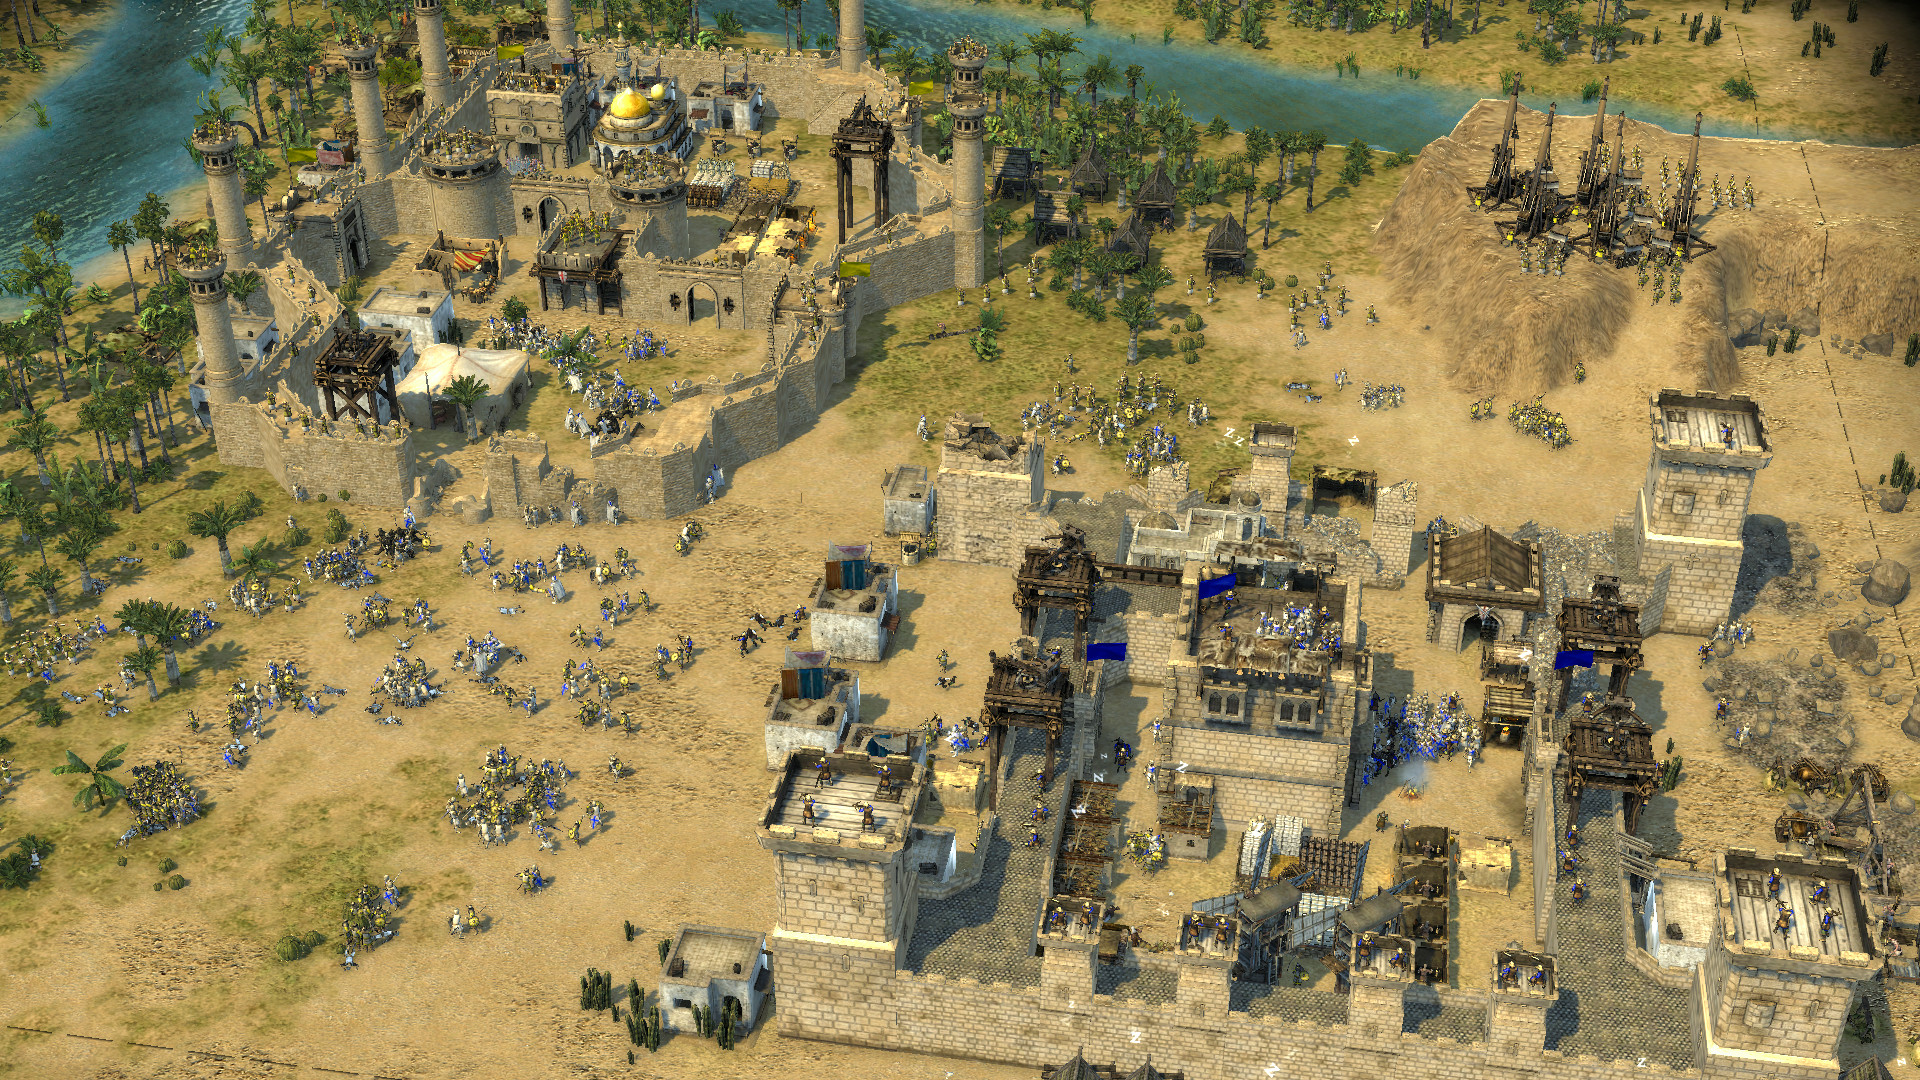 stronghold crusader game free download full version